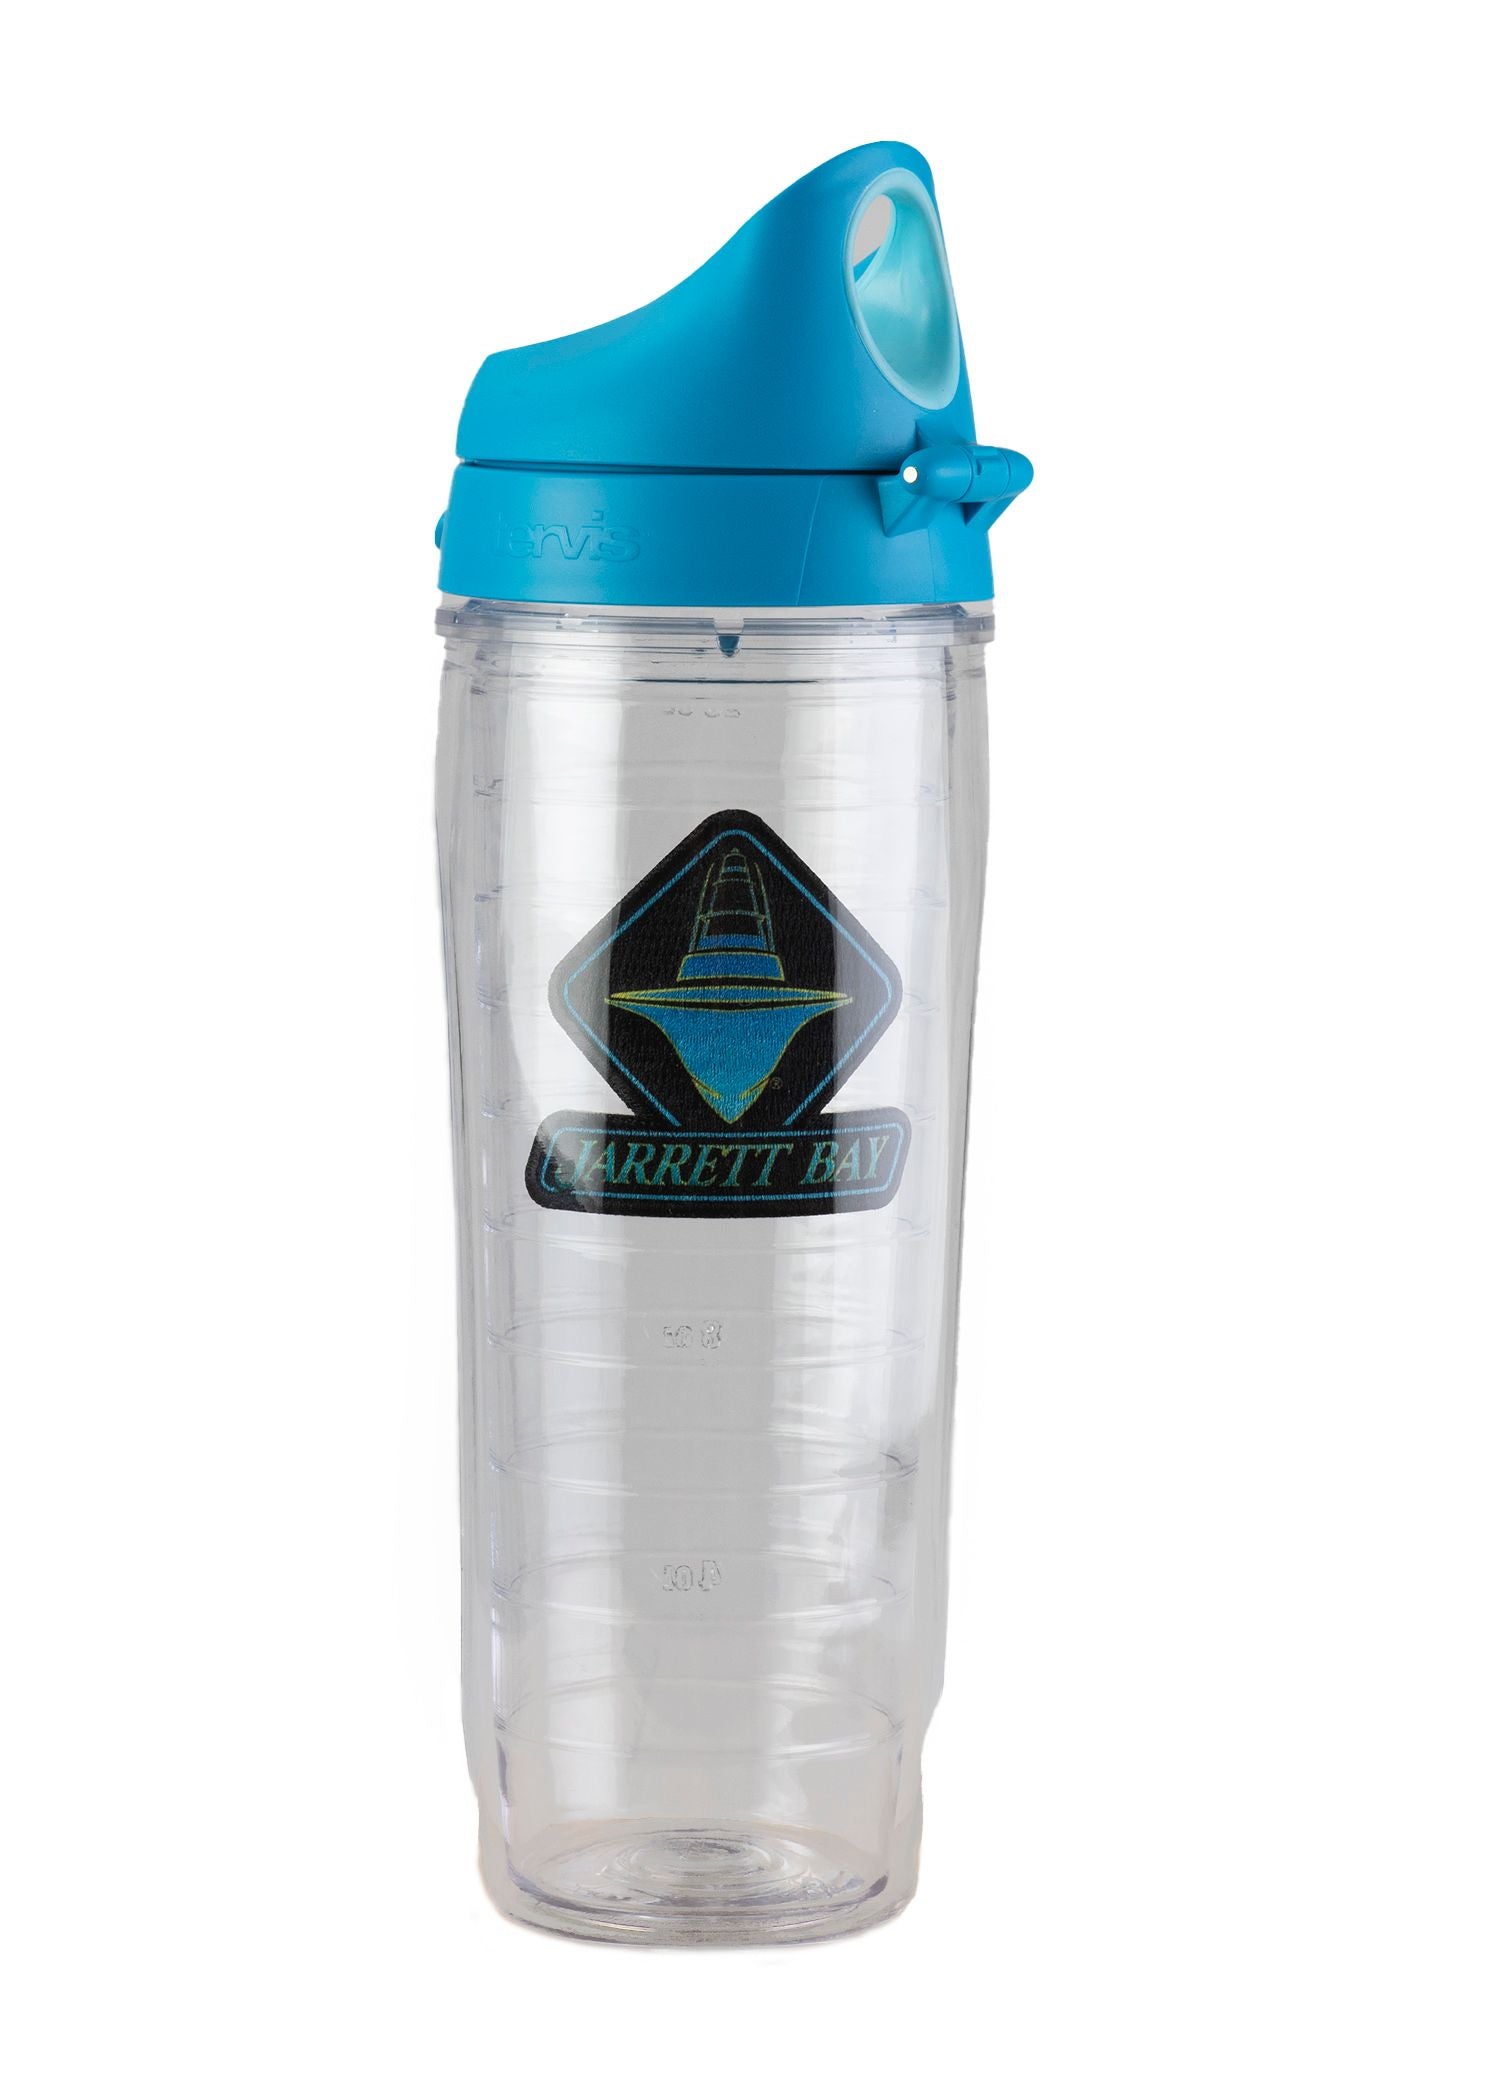 Tervis Water Bottle Lid Assorted Colors